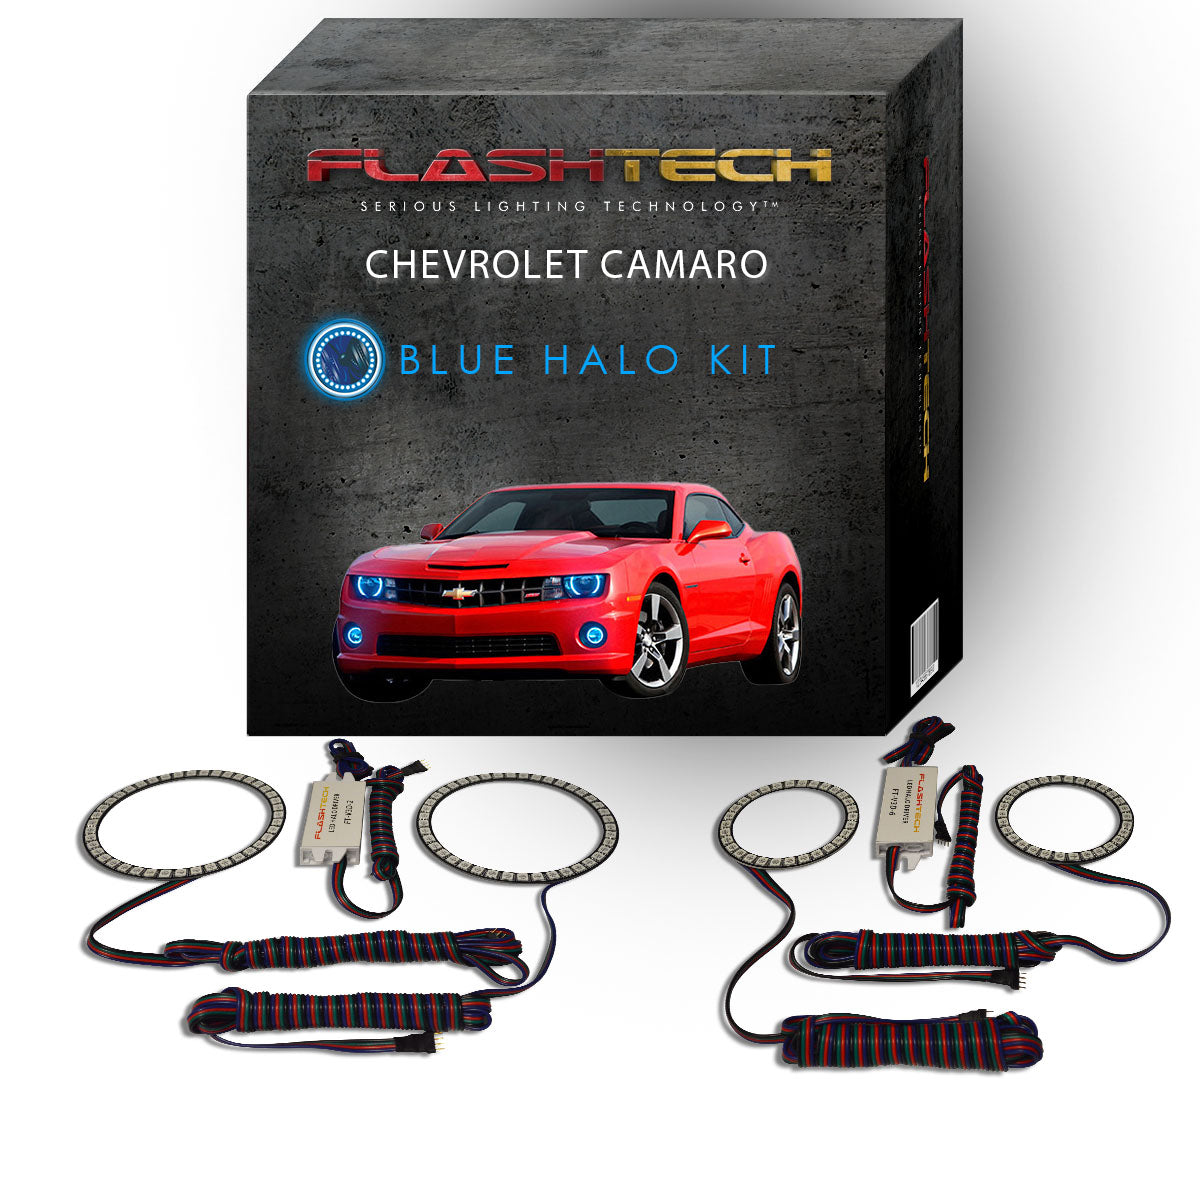 Chevrolet-Camaro-2010, 2011, 2012, 2013-LED-Halo-Headlights and Fog Lights-RGB-No Remote-CY-CANR1013-V3HF